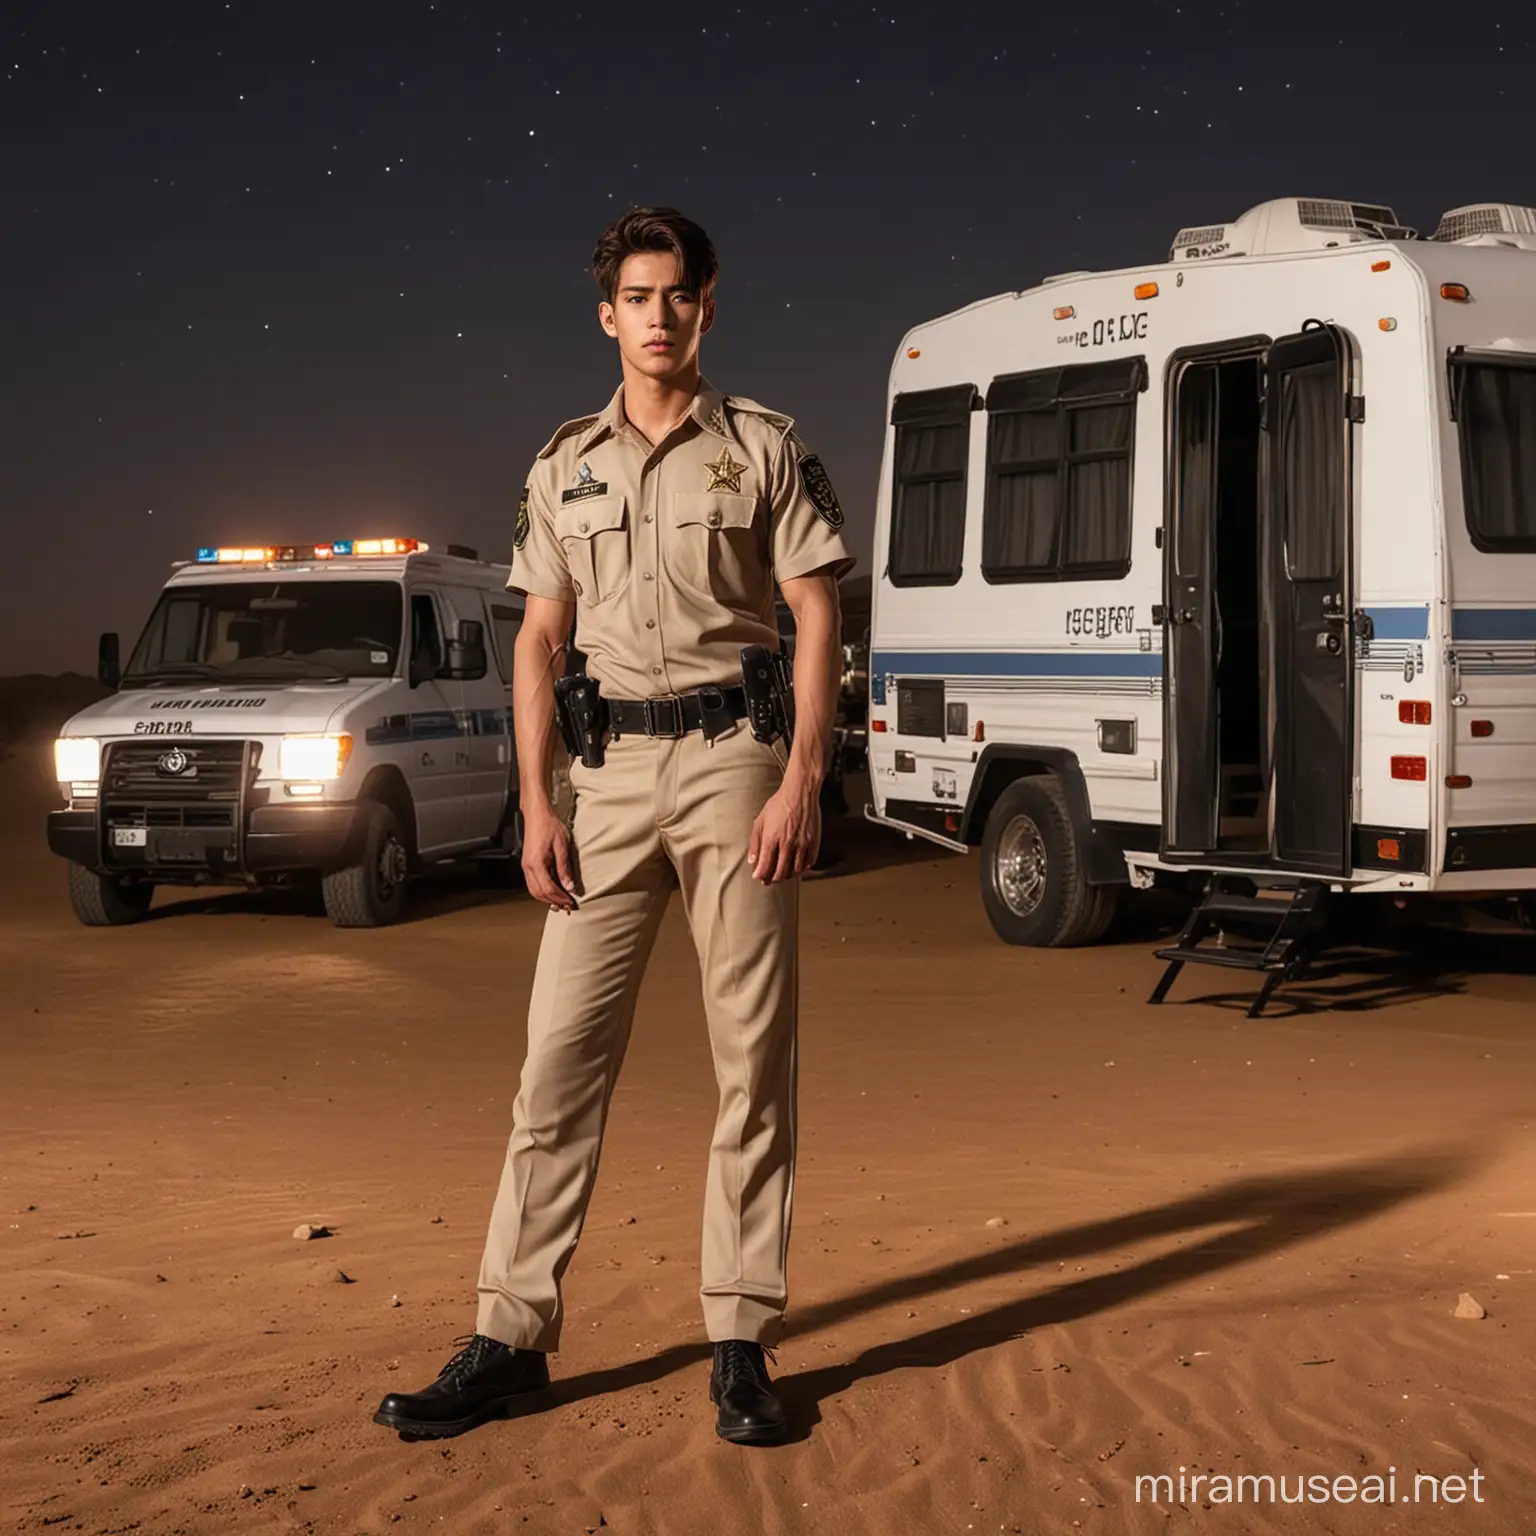 Kpop Boy Sheriff and Arab Girl Desert Night Encounter with Police Motor Home